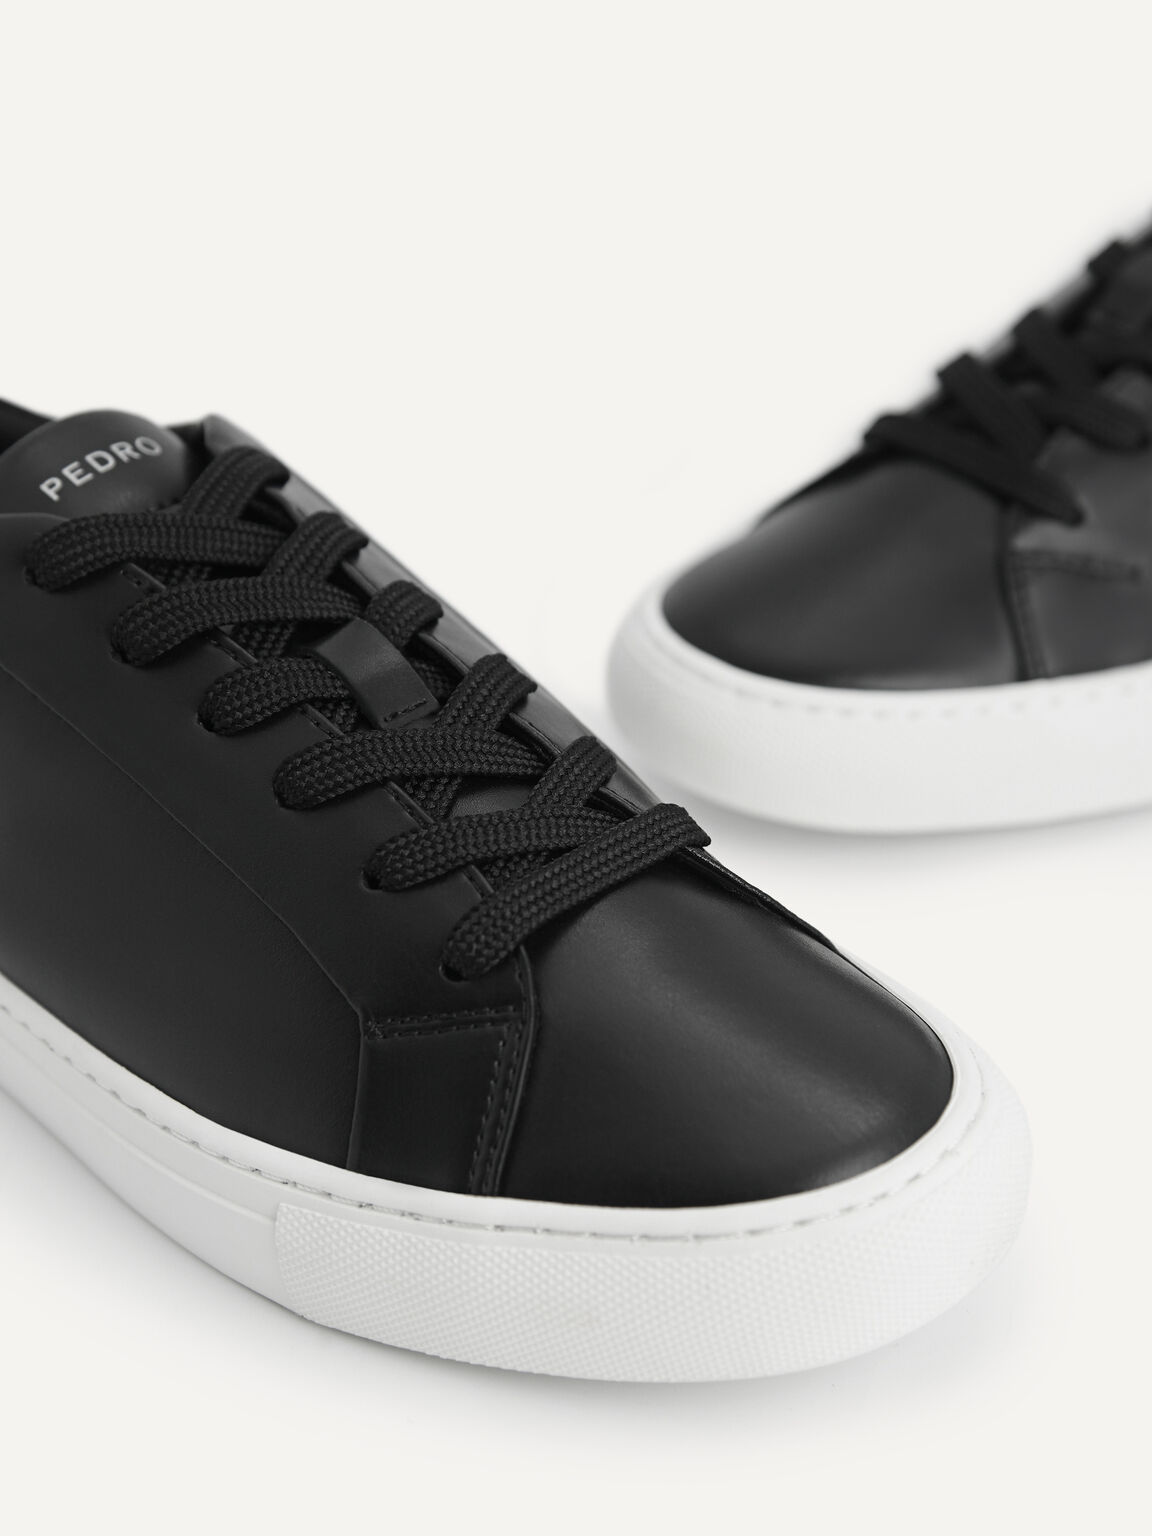 Atlas Lace-up Sneakers, Black, hi-res